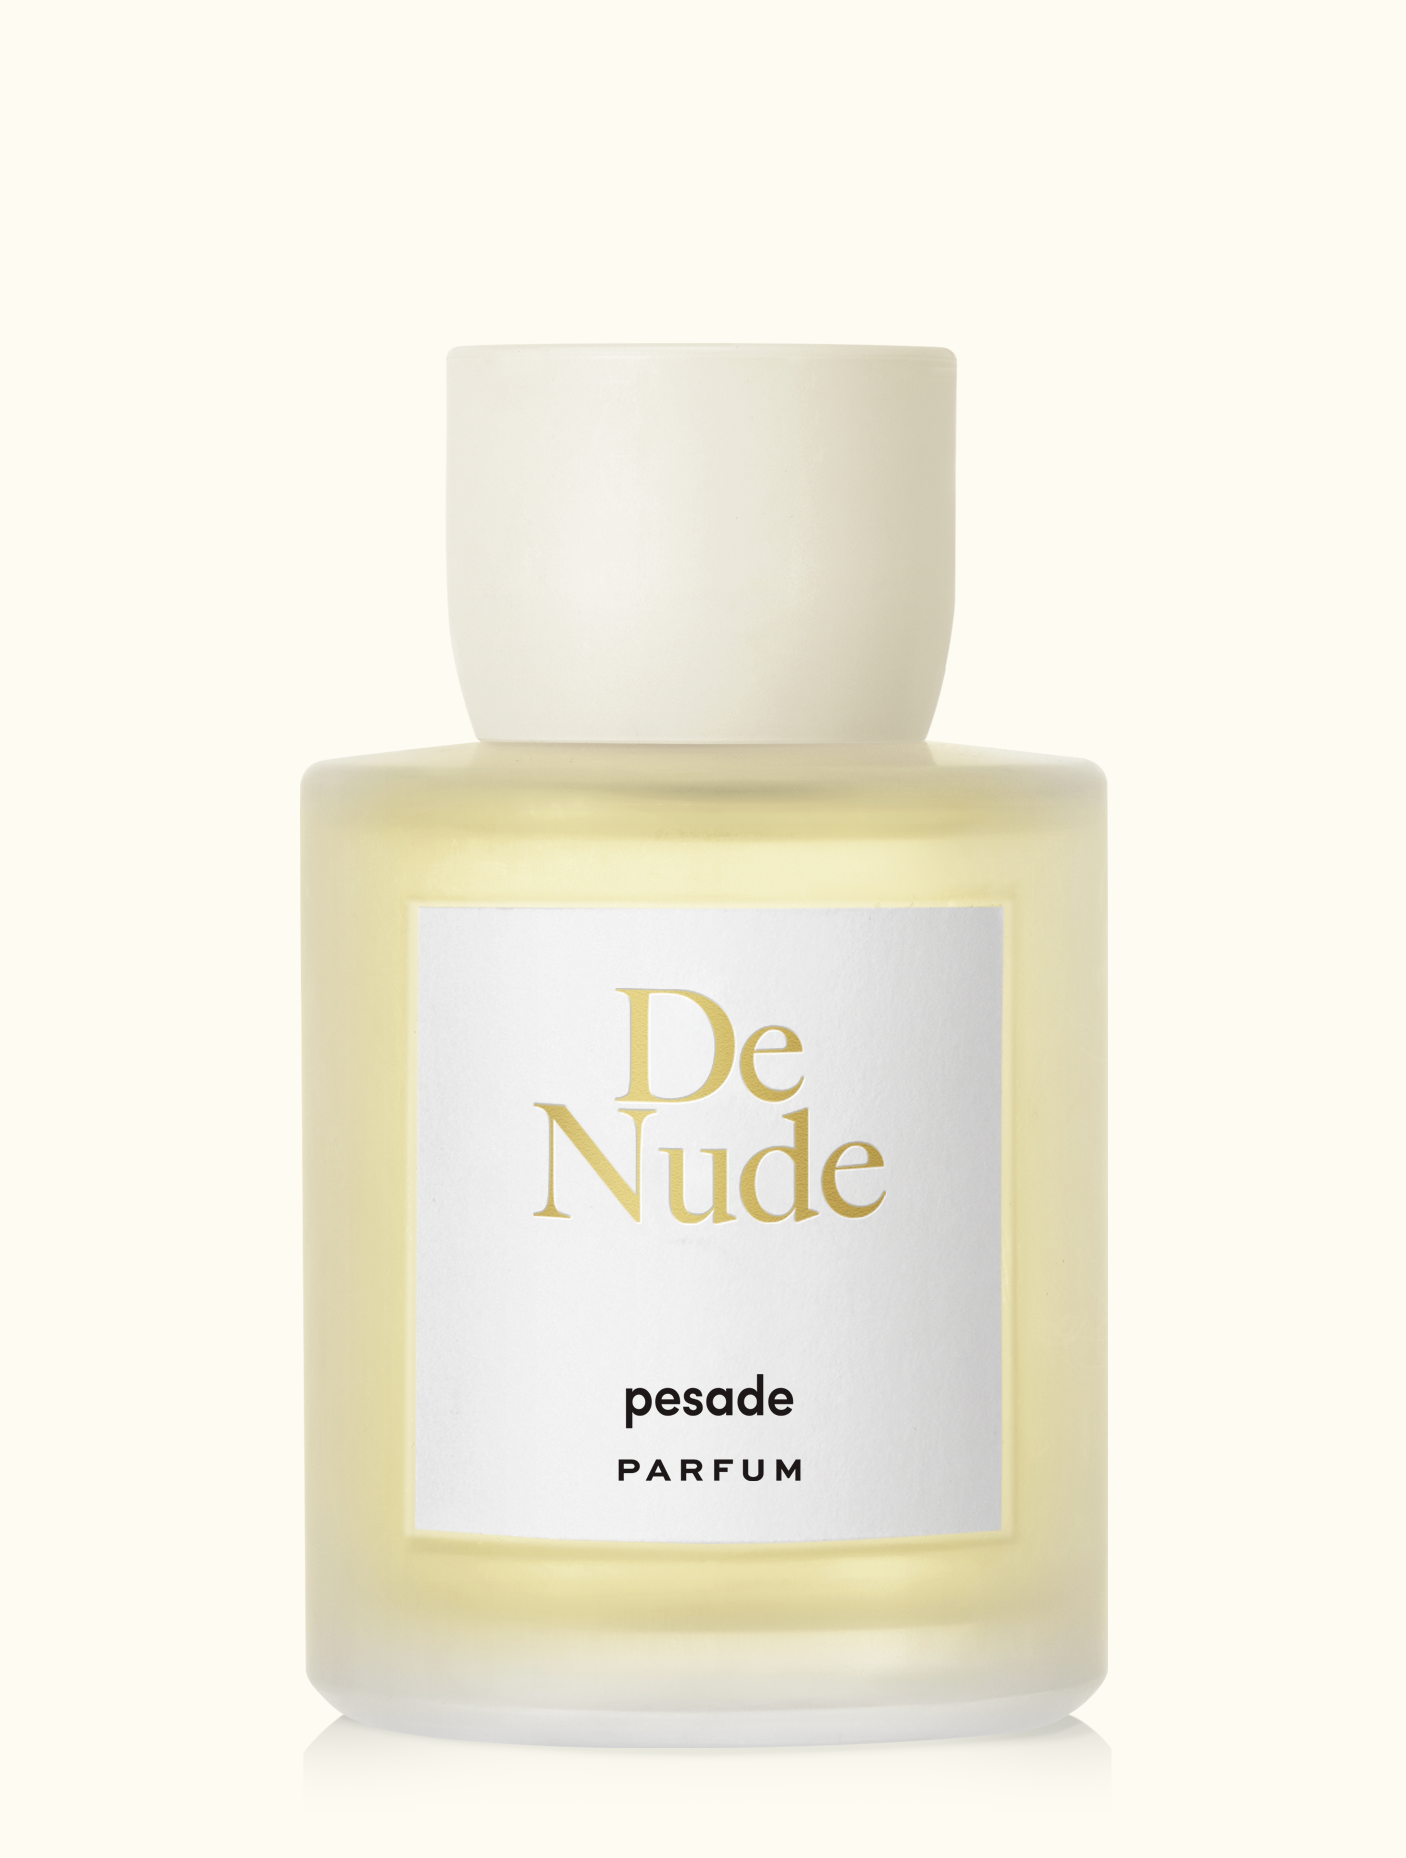 De Nude Parfum 100ml